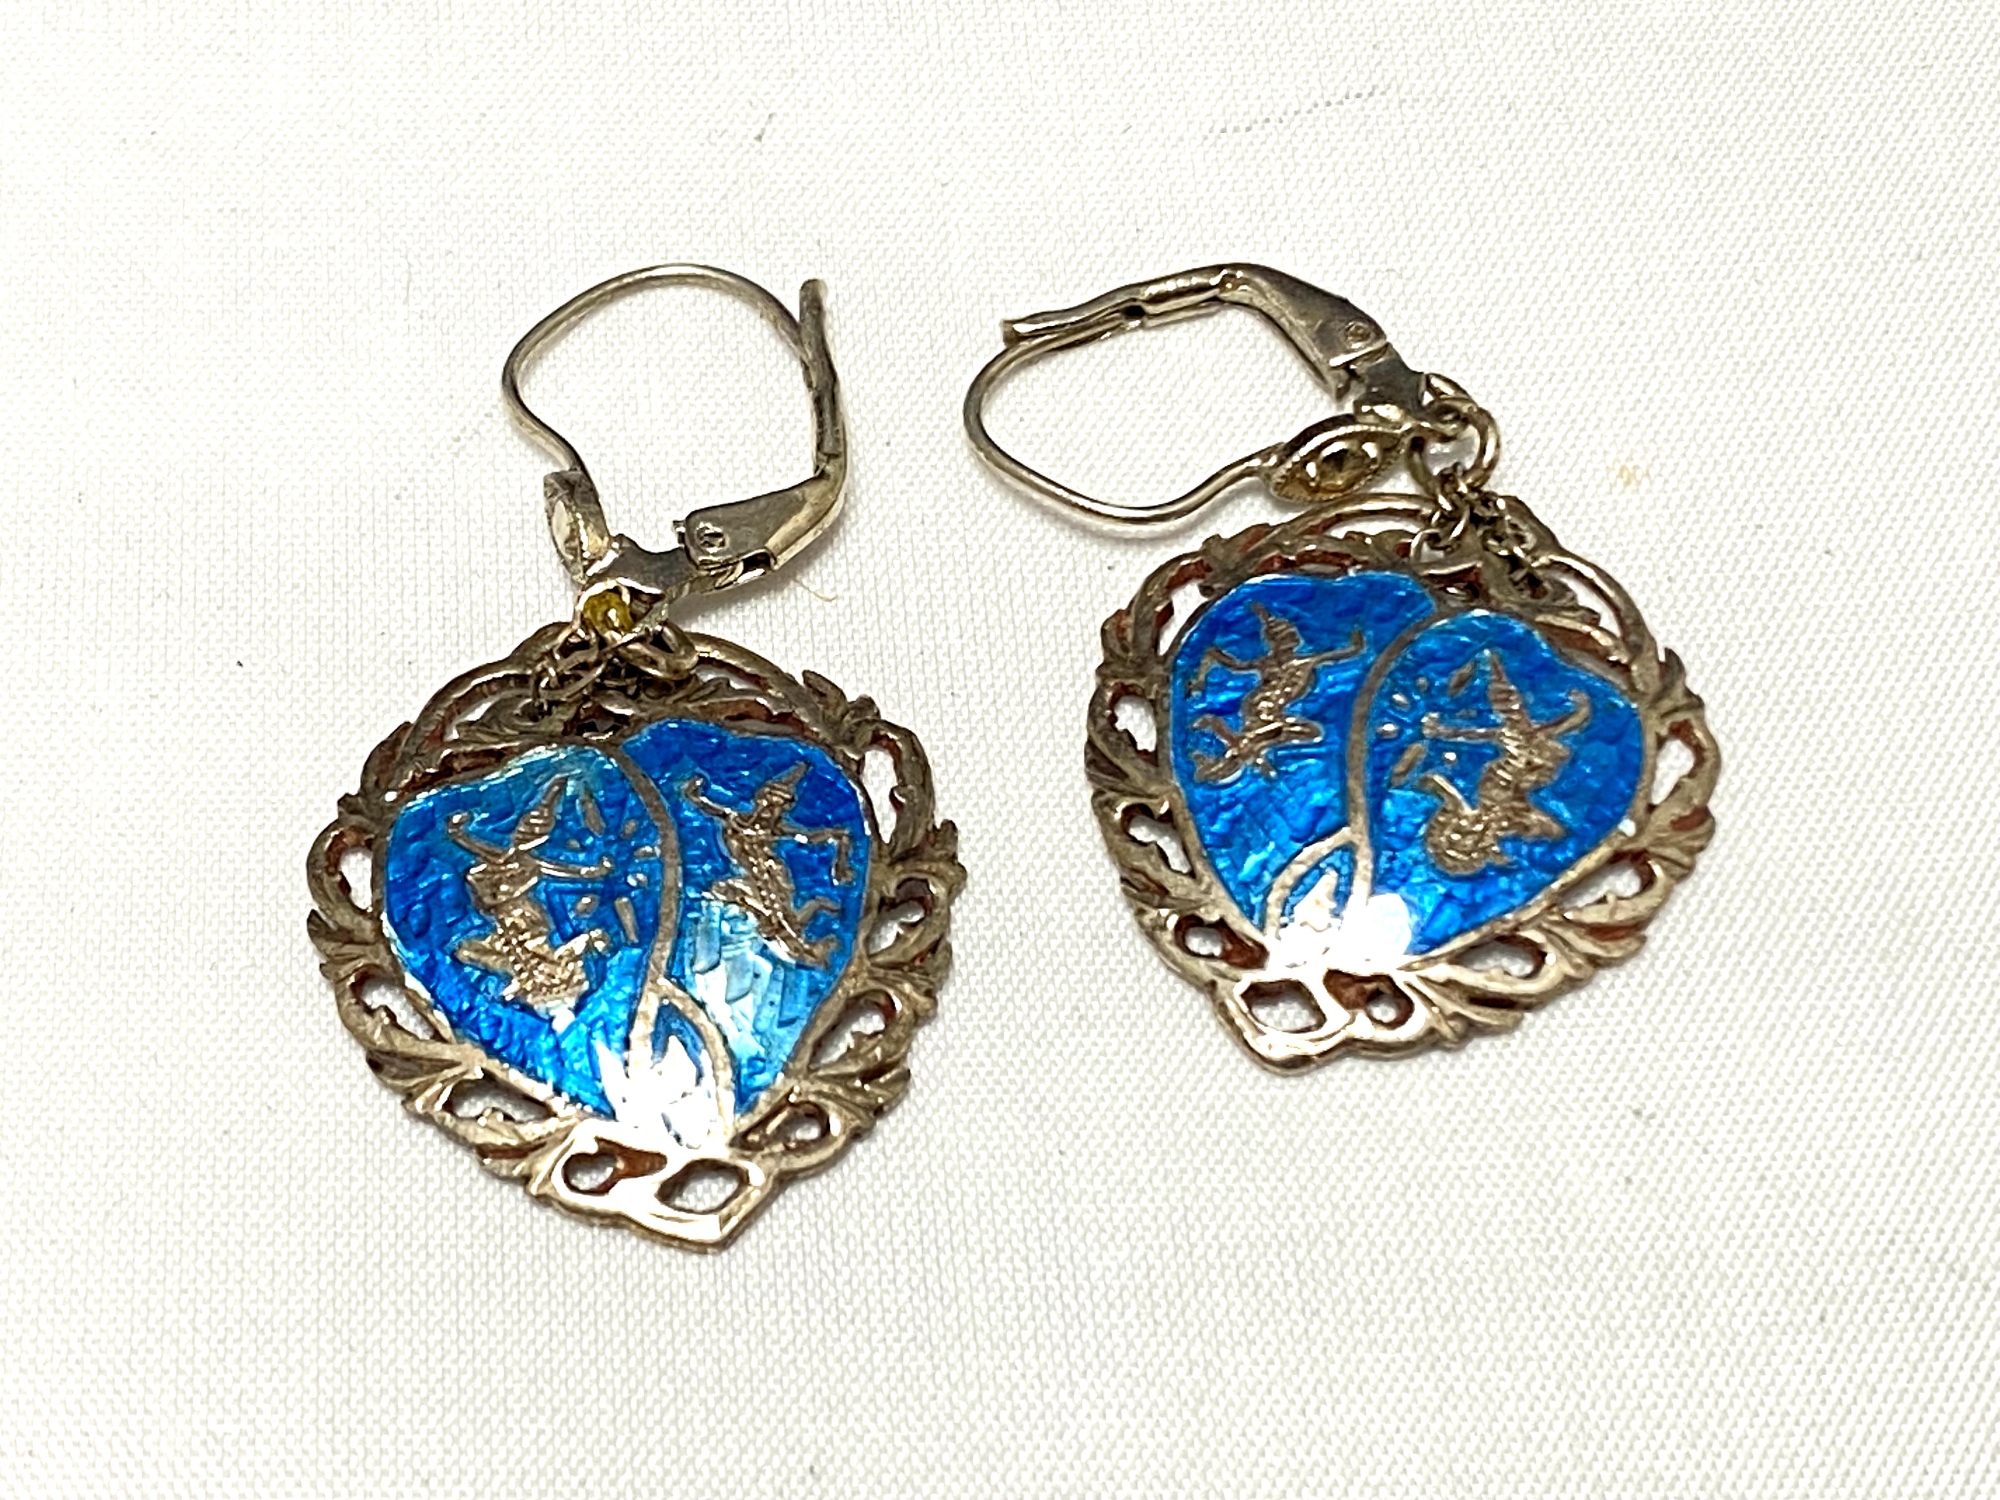 A pair of silver and enamel earrings